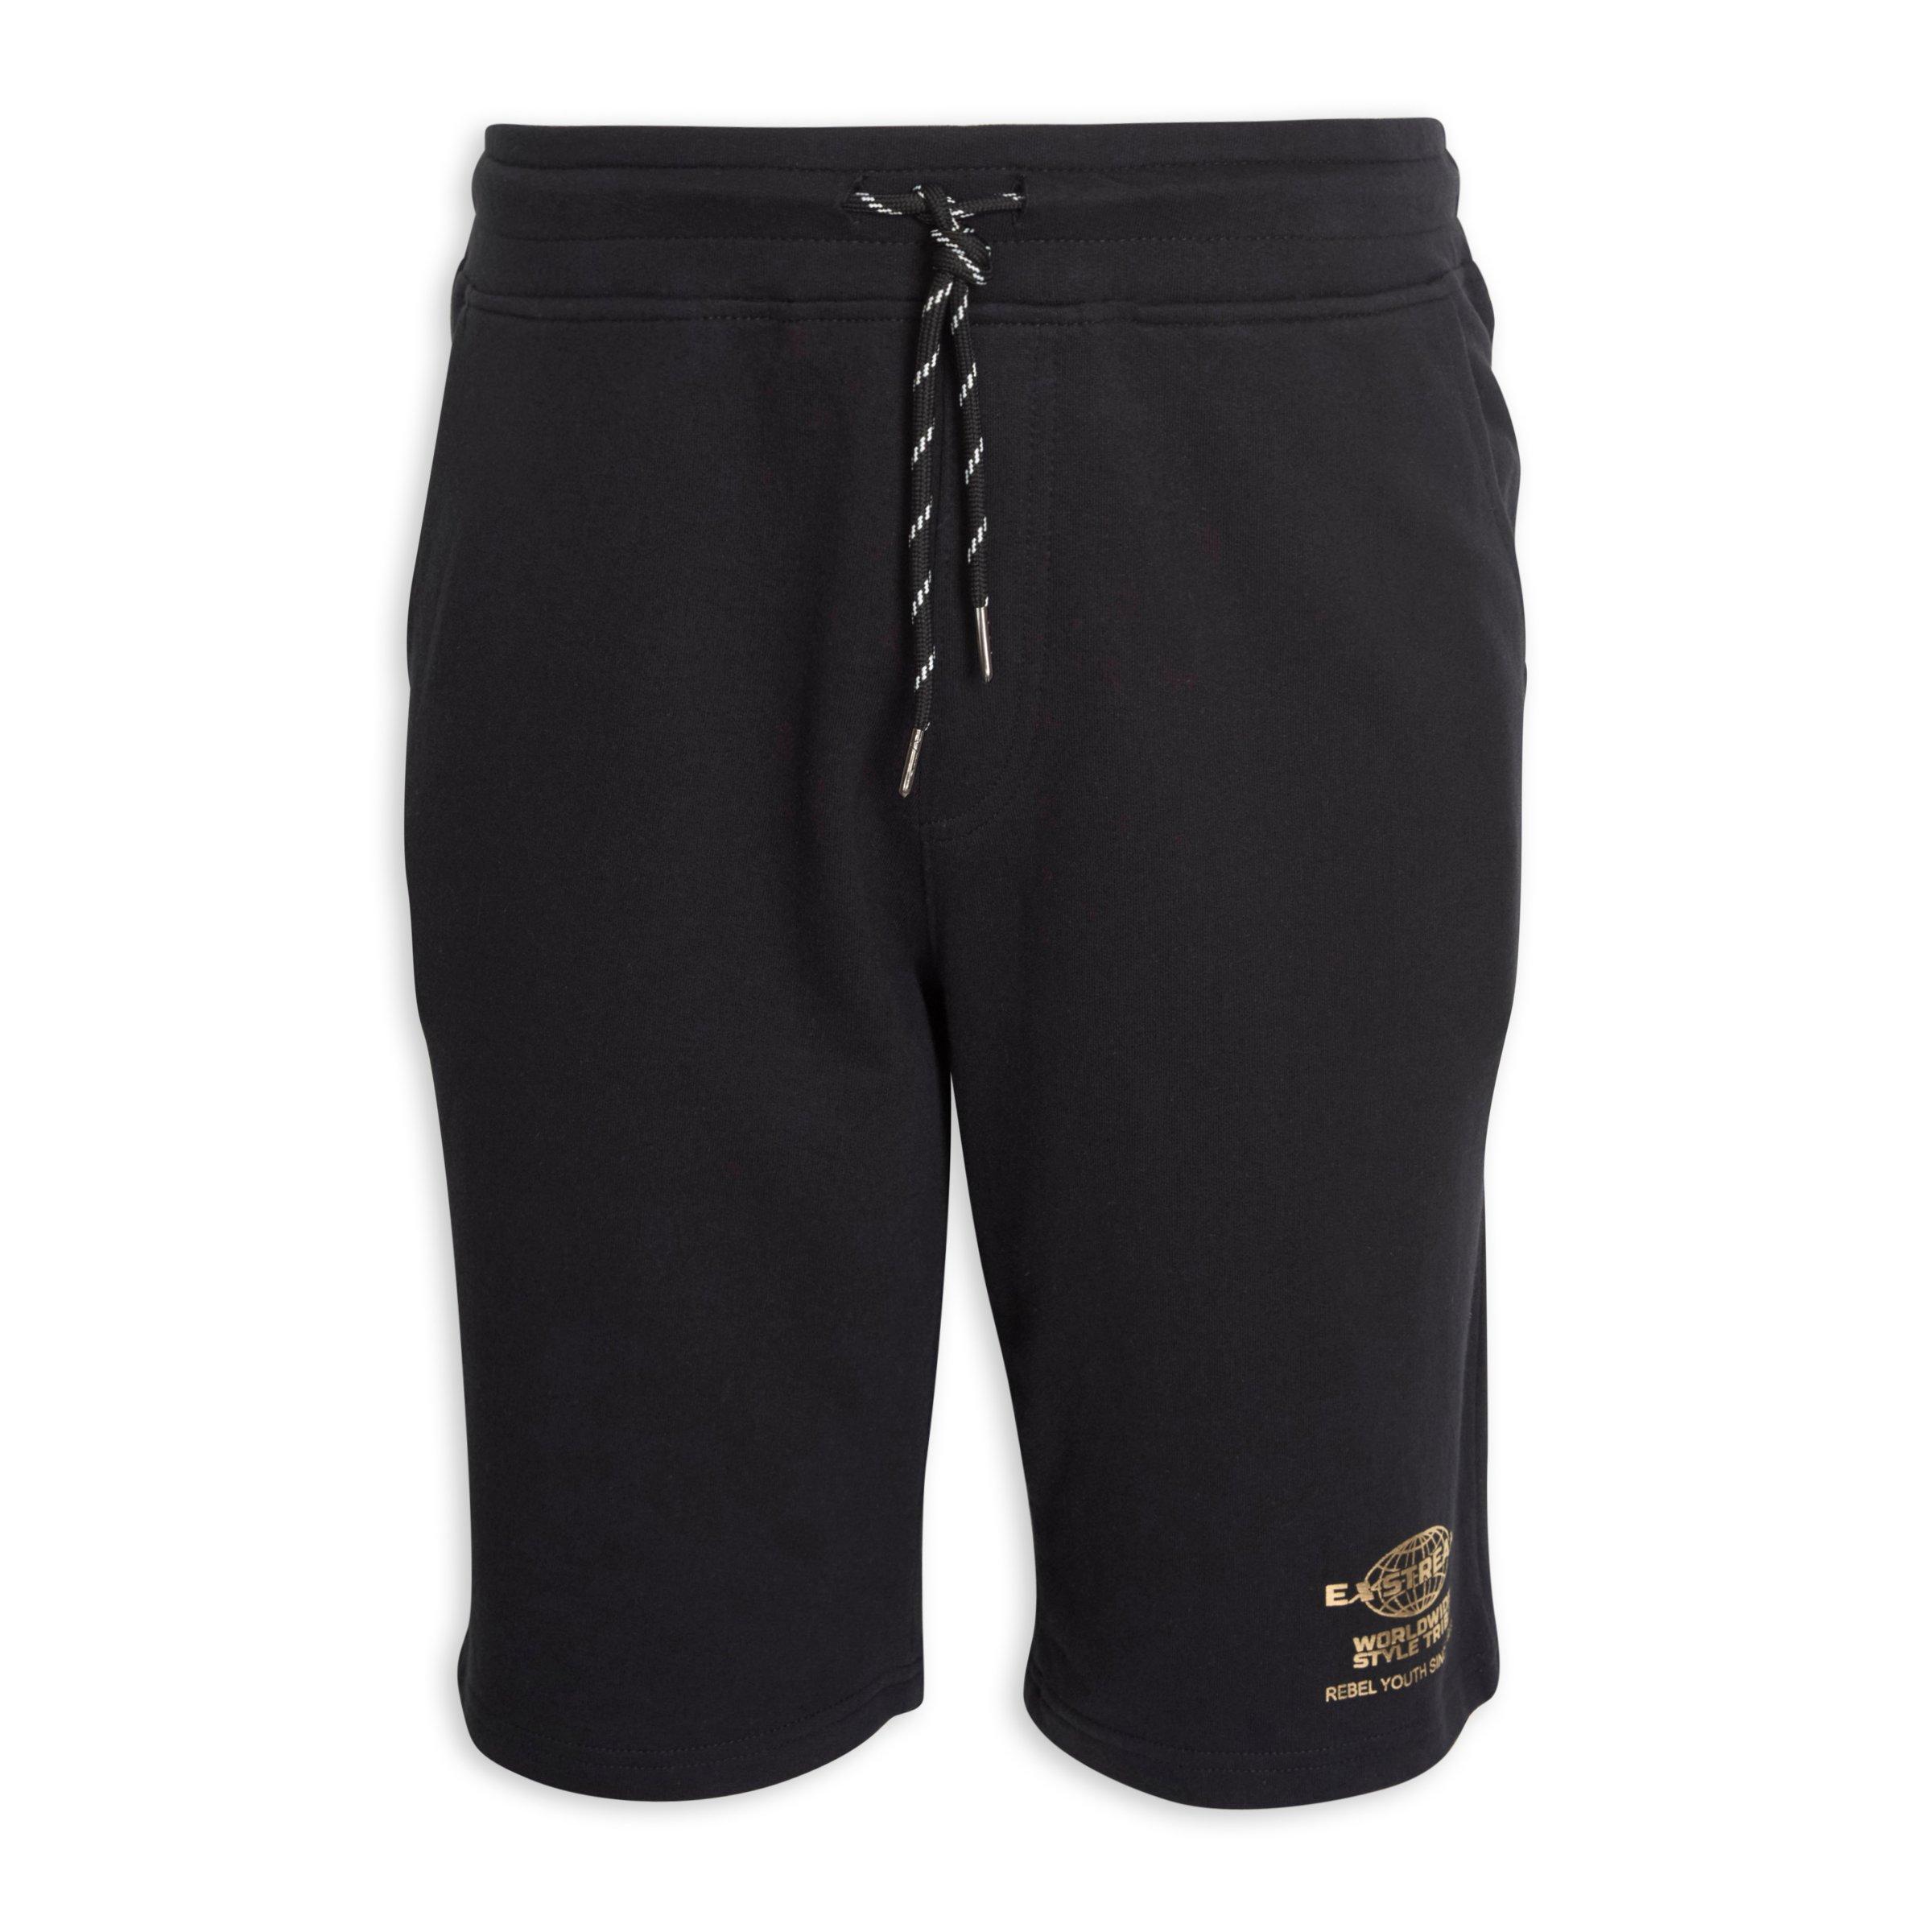 Buy Exstream Black Pull-On Shorts Online | Truworths